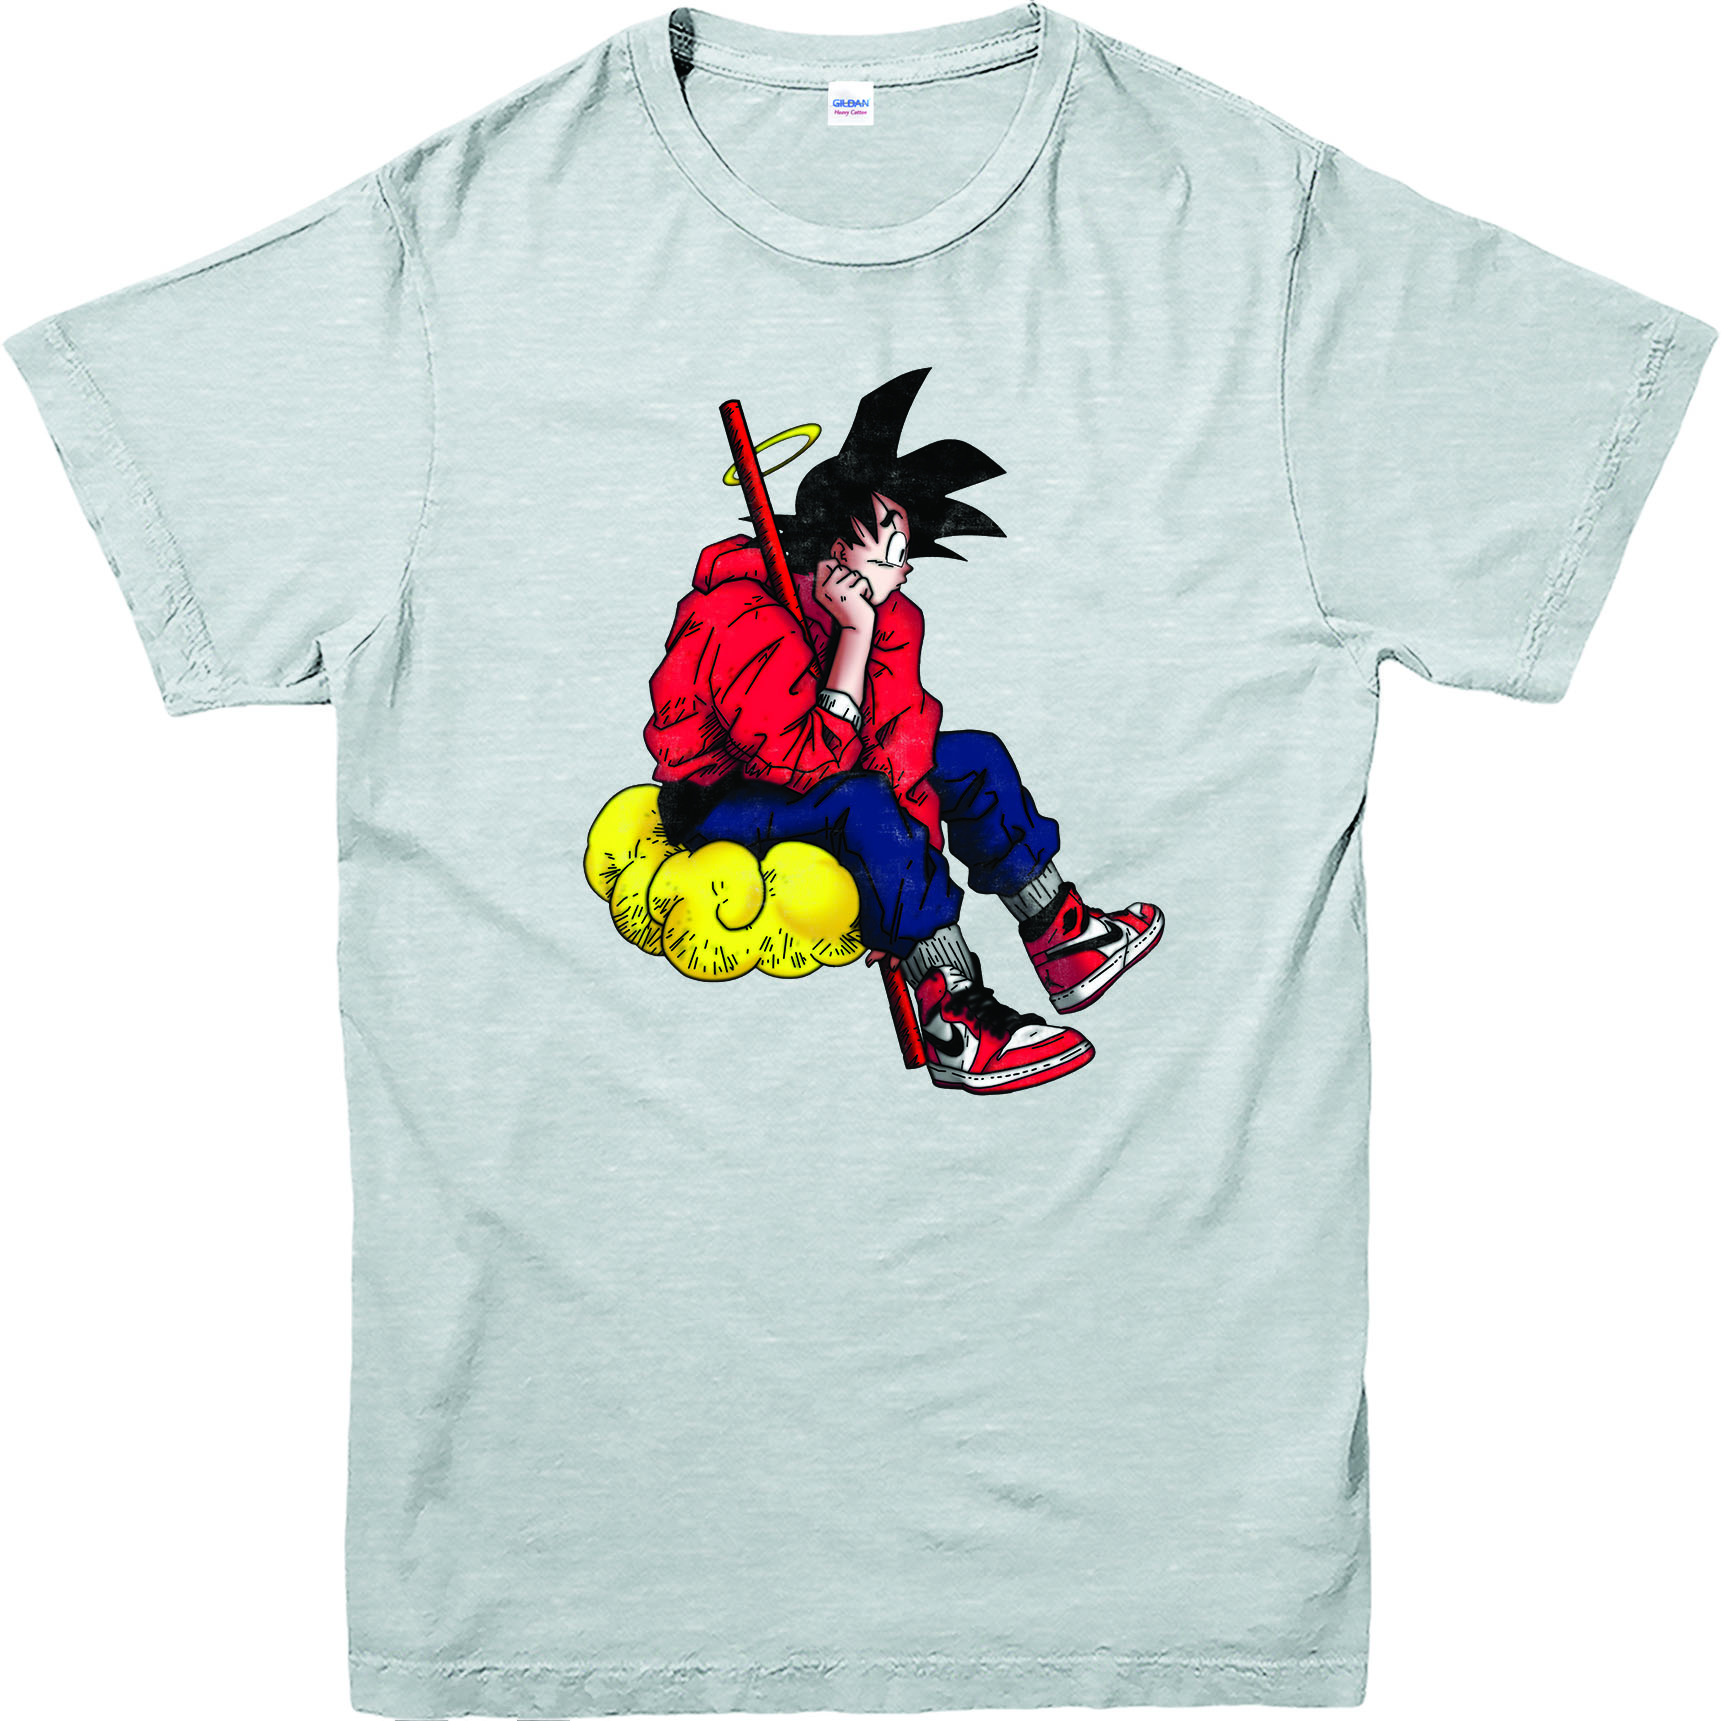 Dragon Ball Z T-Shirt,Goku Cloud,Japanese Anime Adult and kids Sizes | eBay